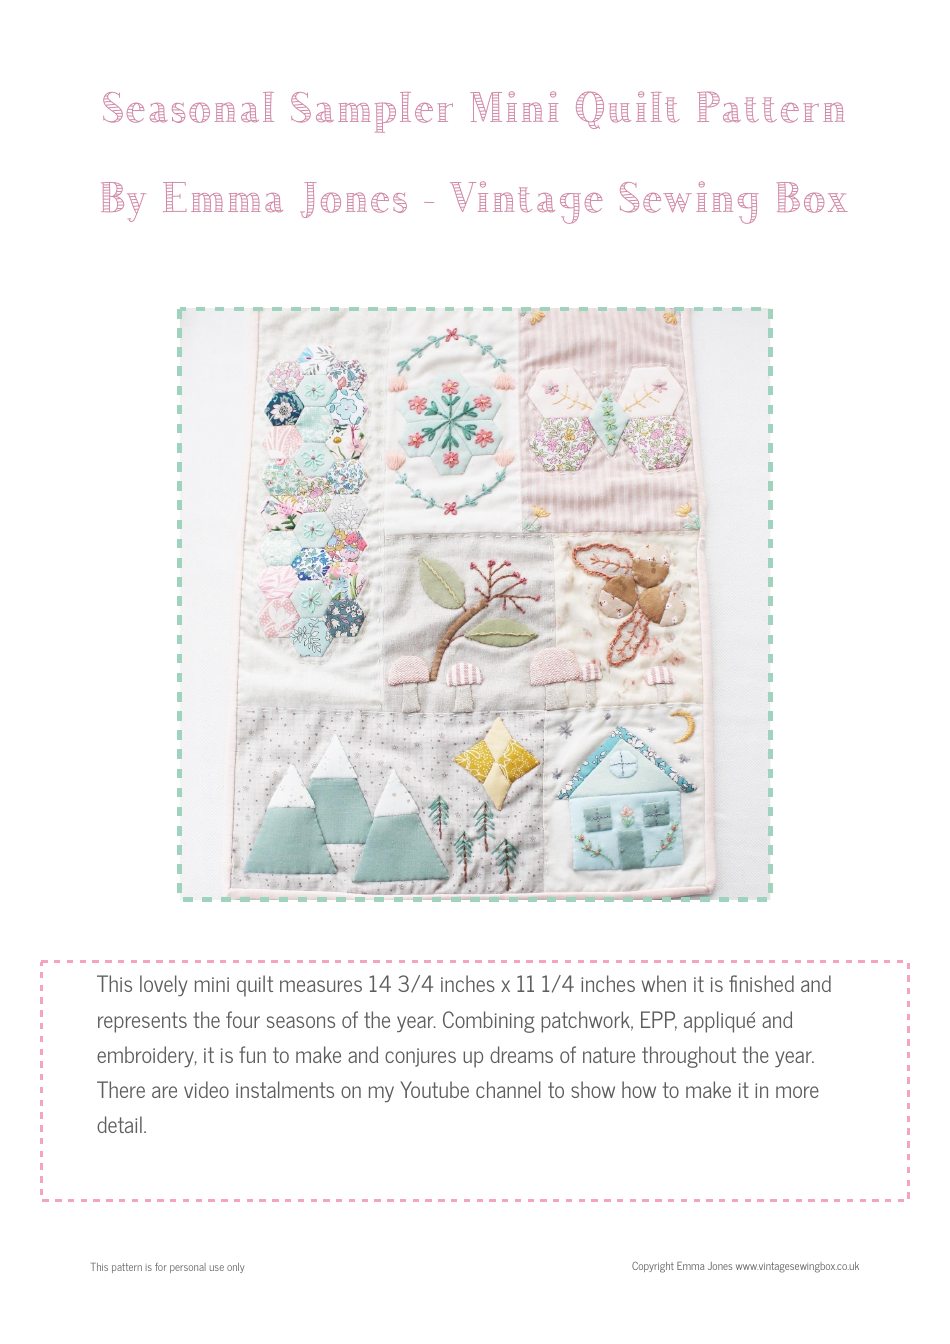 Seasonal Sampler Quilt pattern templates for Emma Jones Vintage Sewing Box